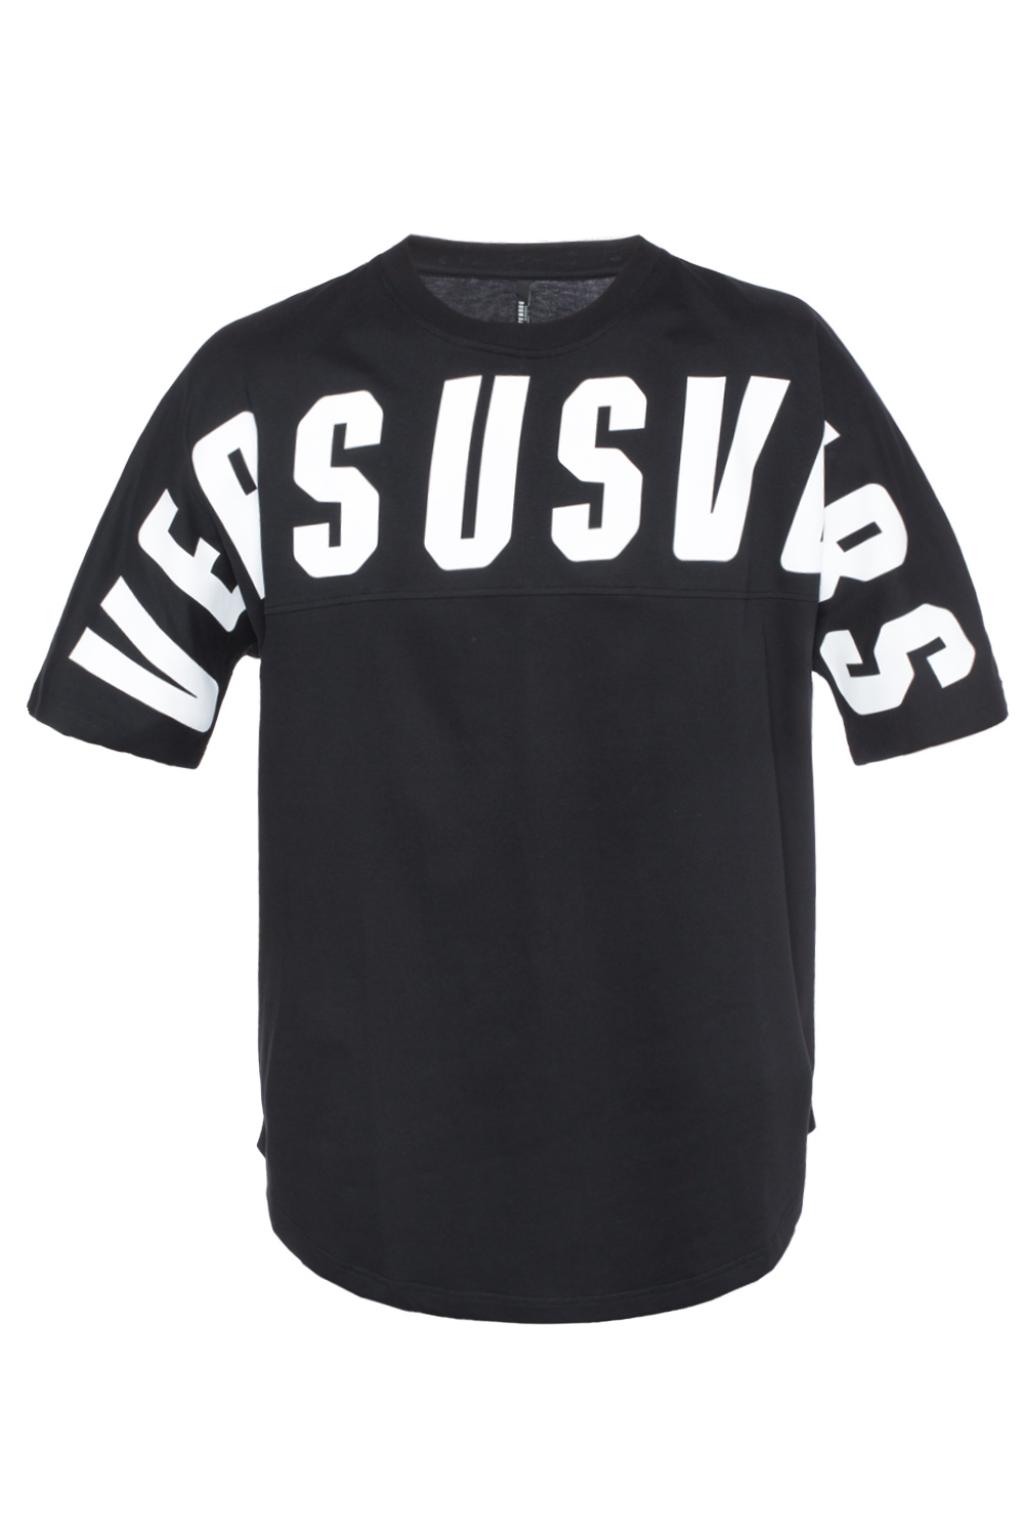 versus versace logo t shirt